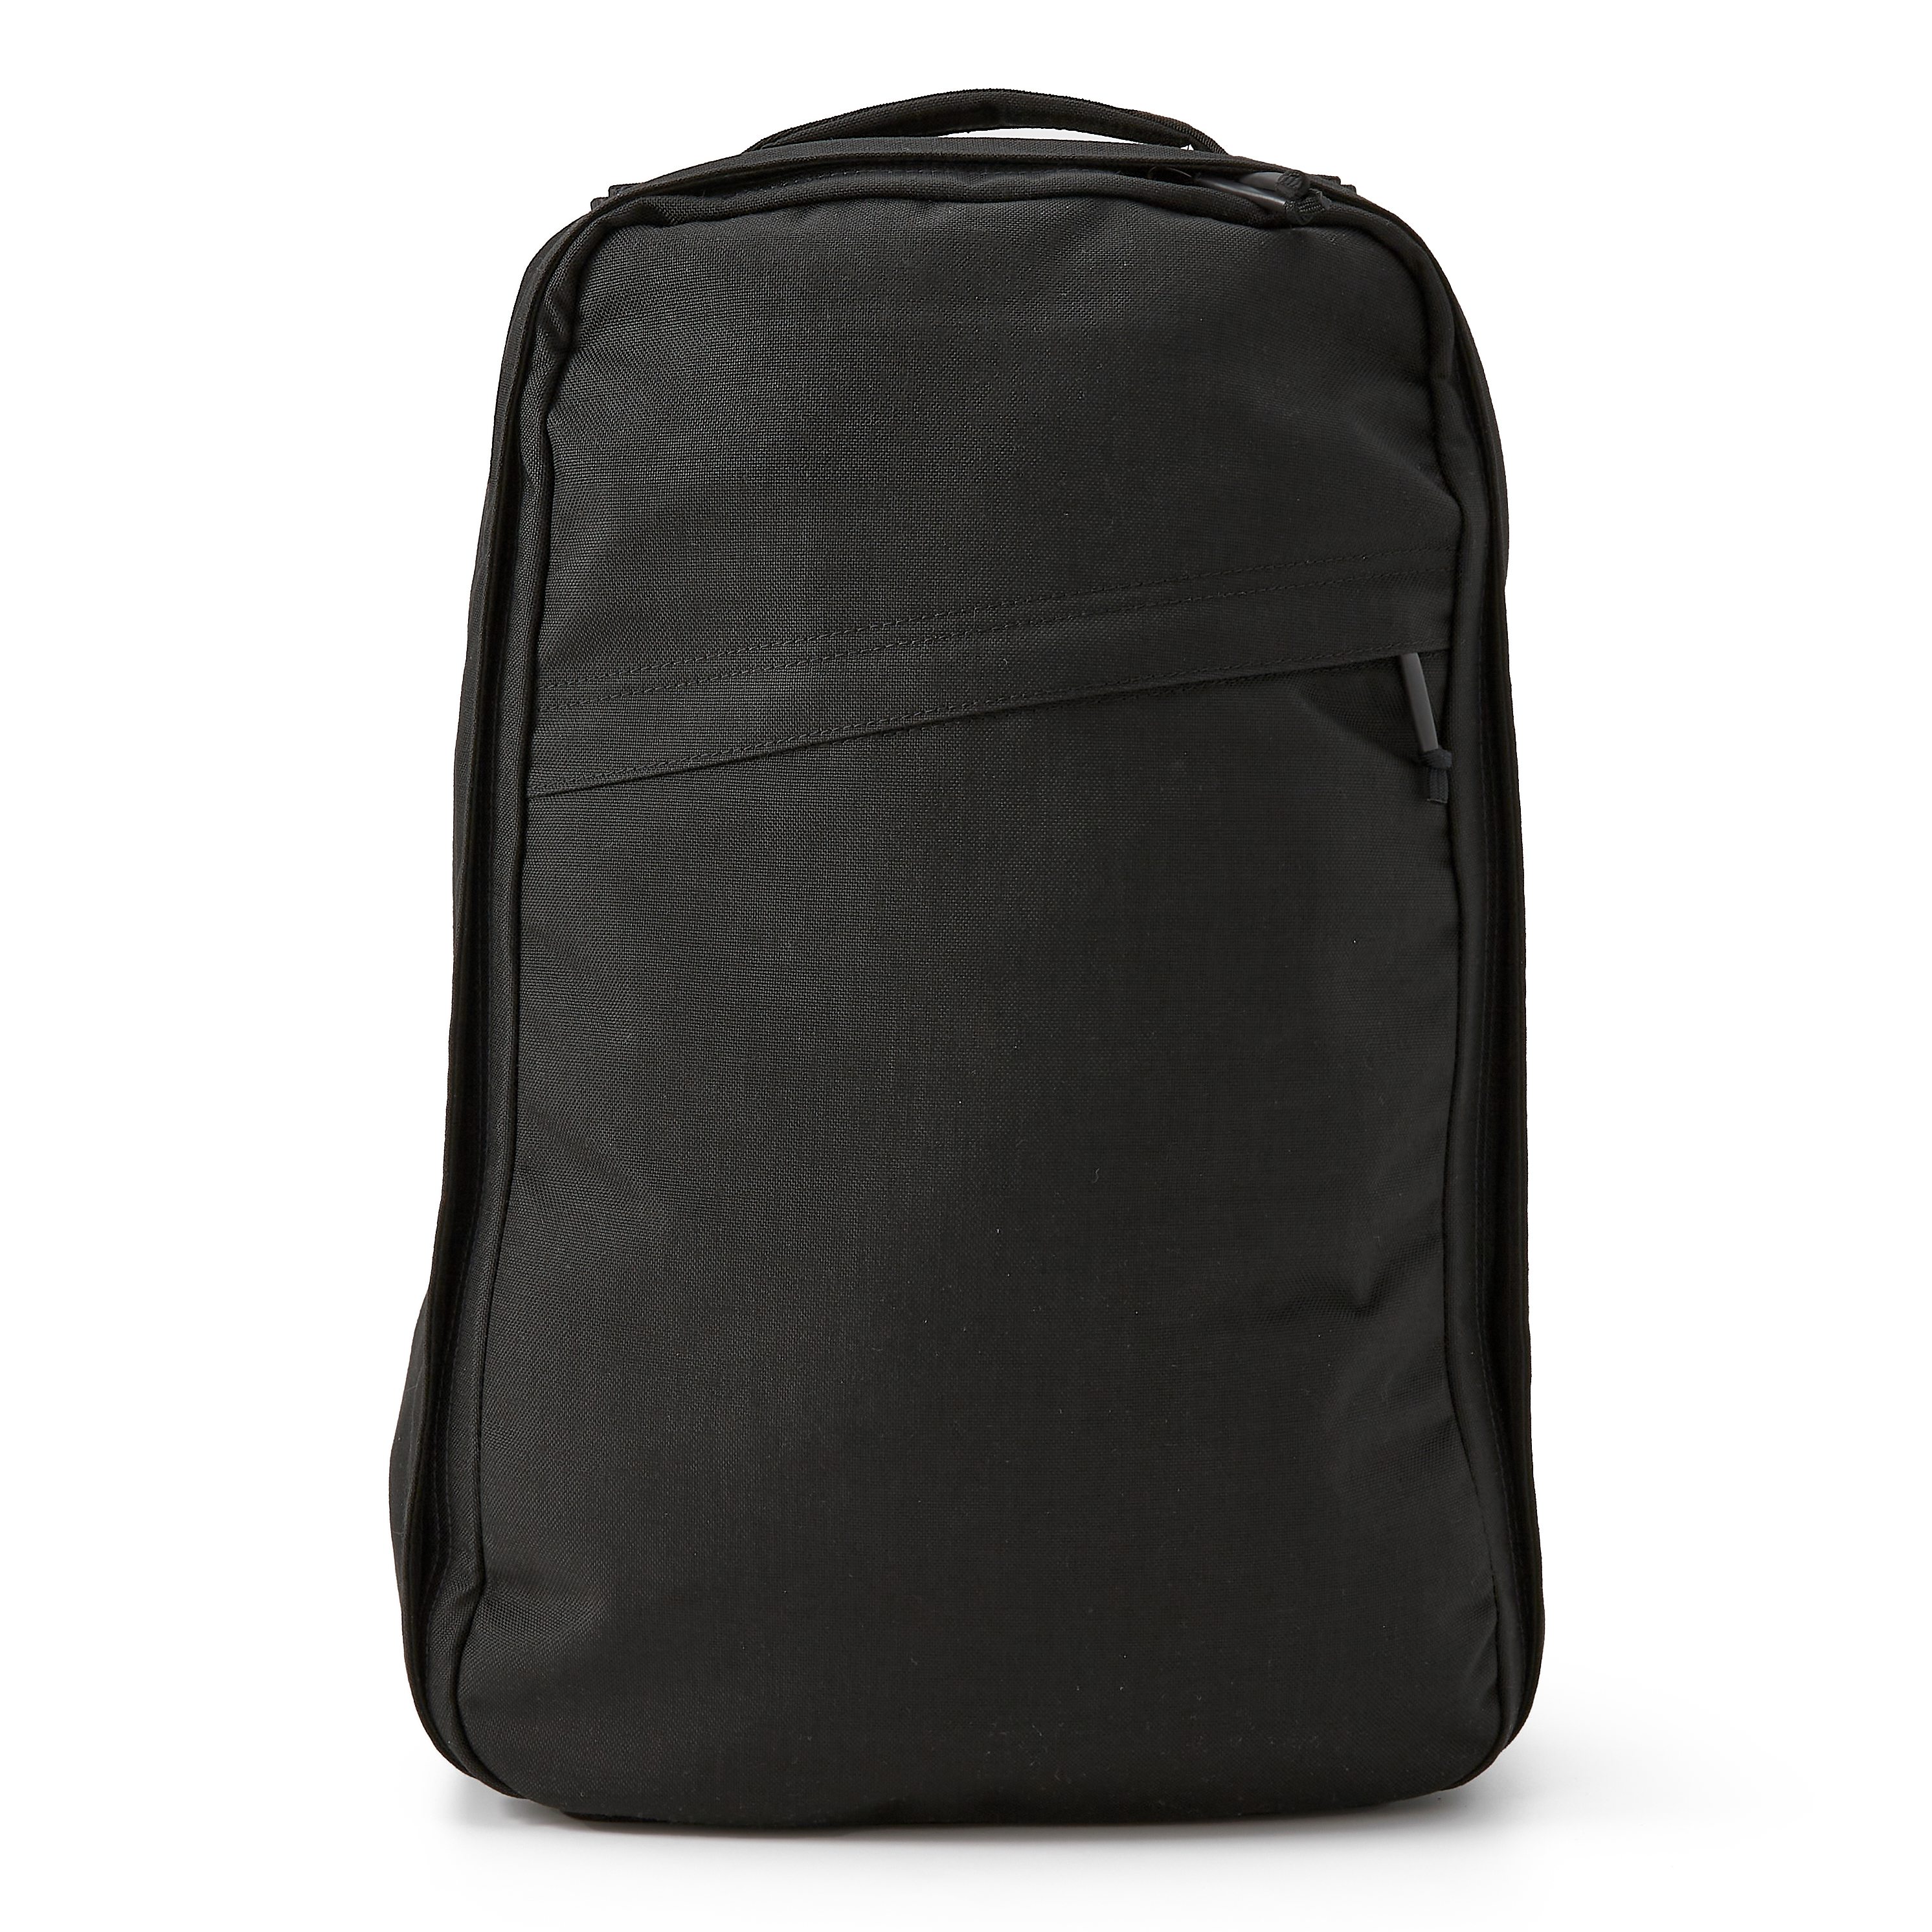 Huckberry X GORUCK GR1 Slick Backpack - 26L in Black